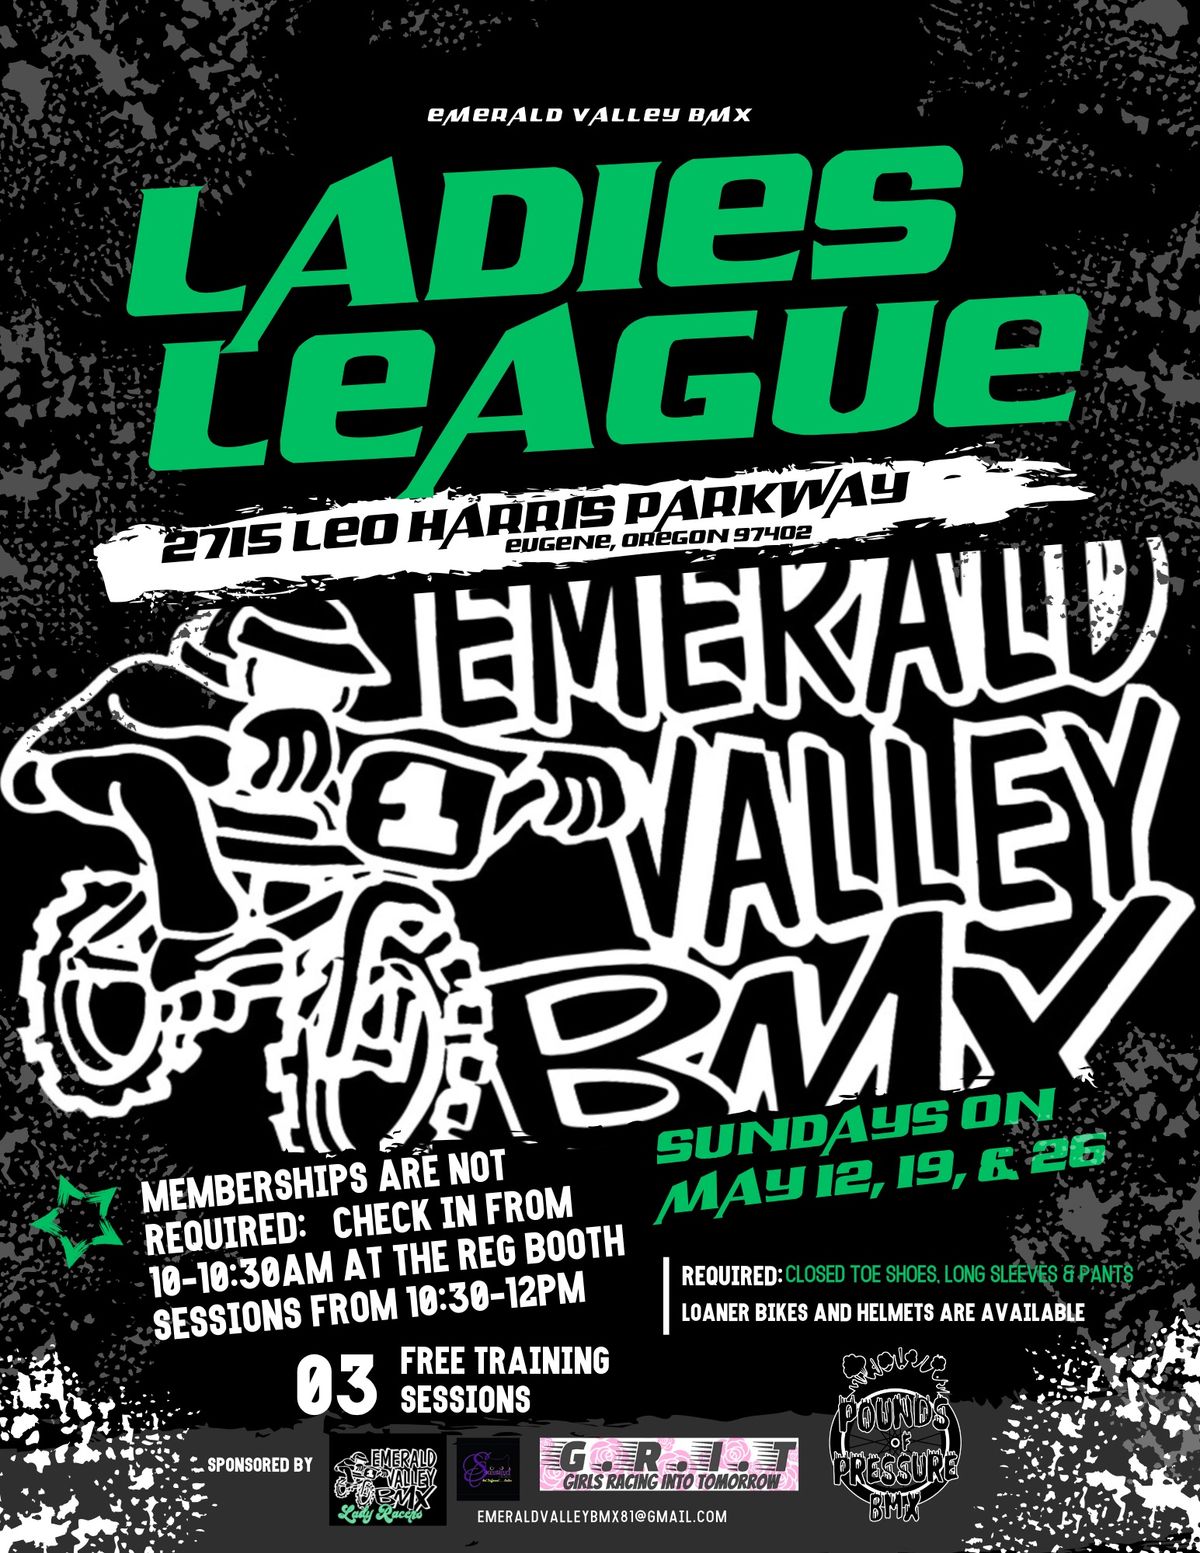 Emerald Valley BMX\u2019s Ladies League